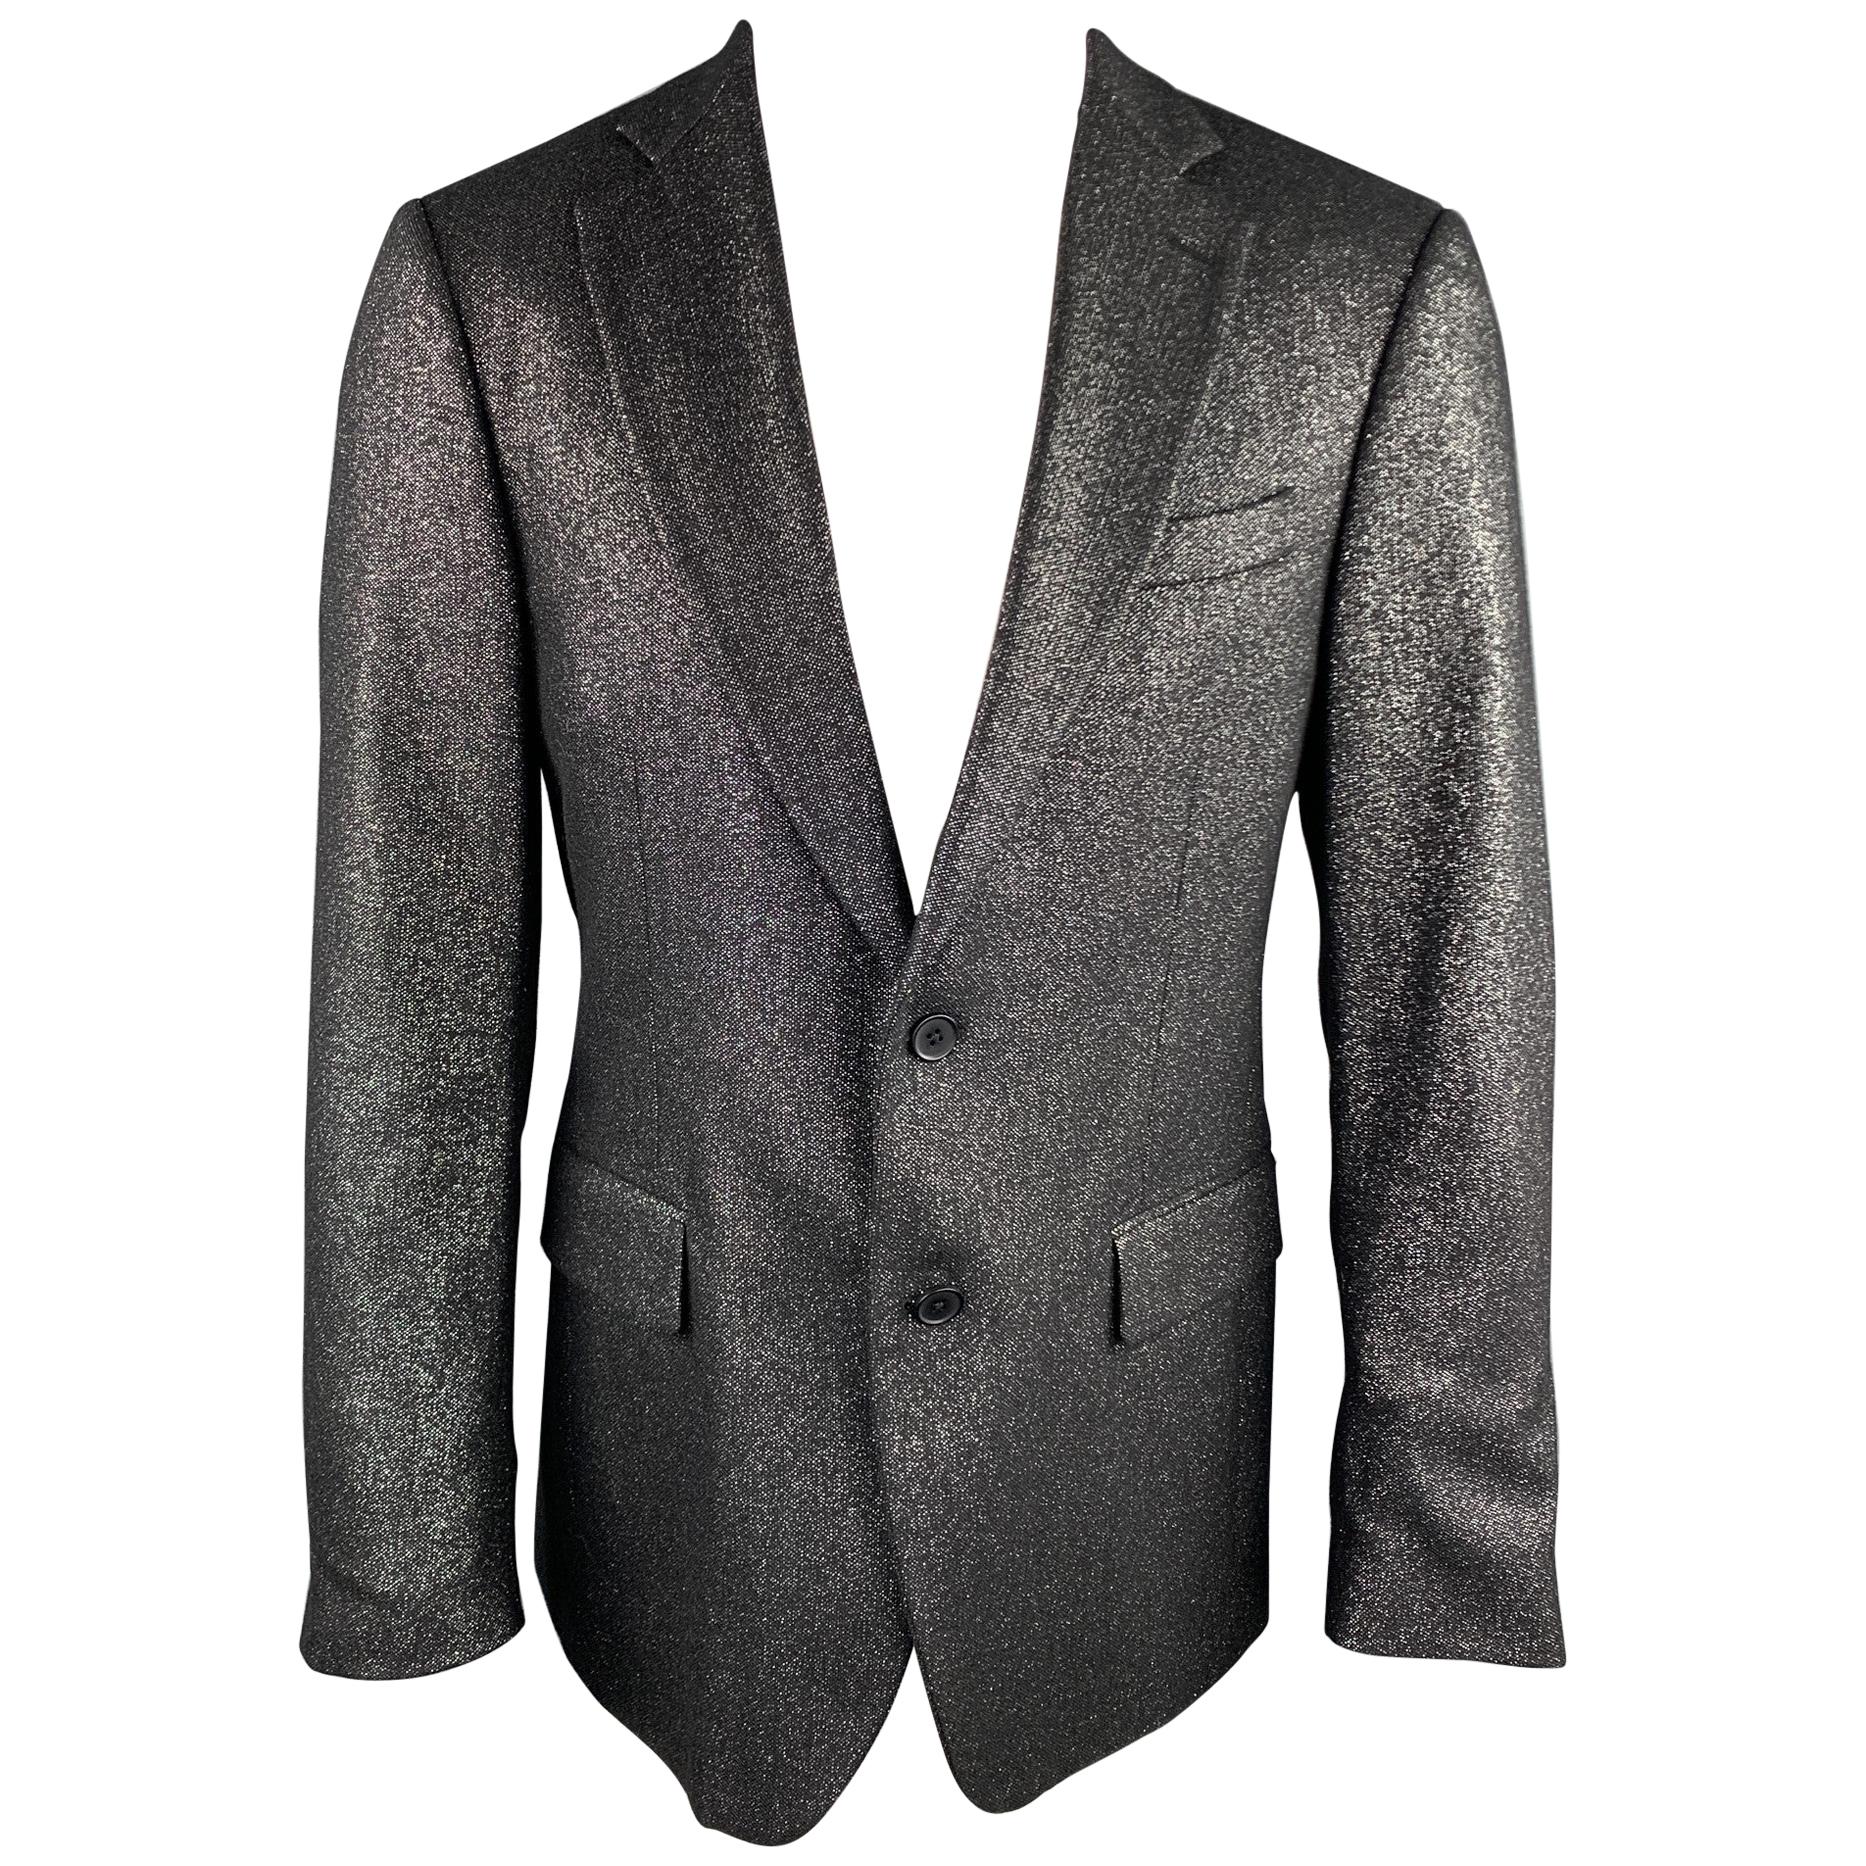 MICHAEL KORS Size 40 Regular Black & Silver Metallic Wool Blend Sport Coat